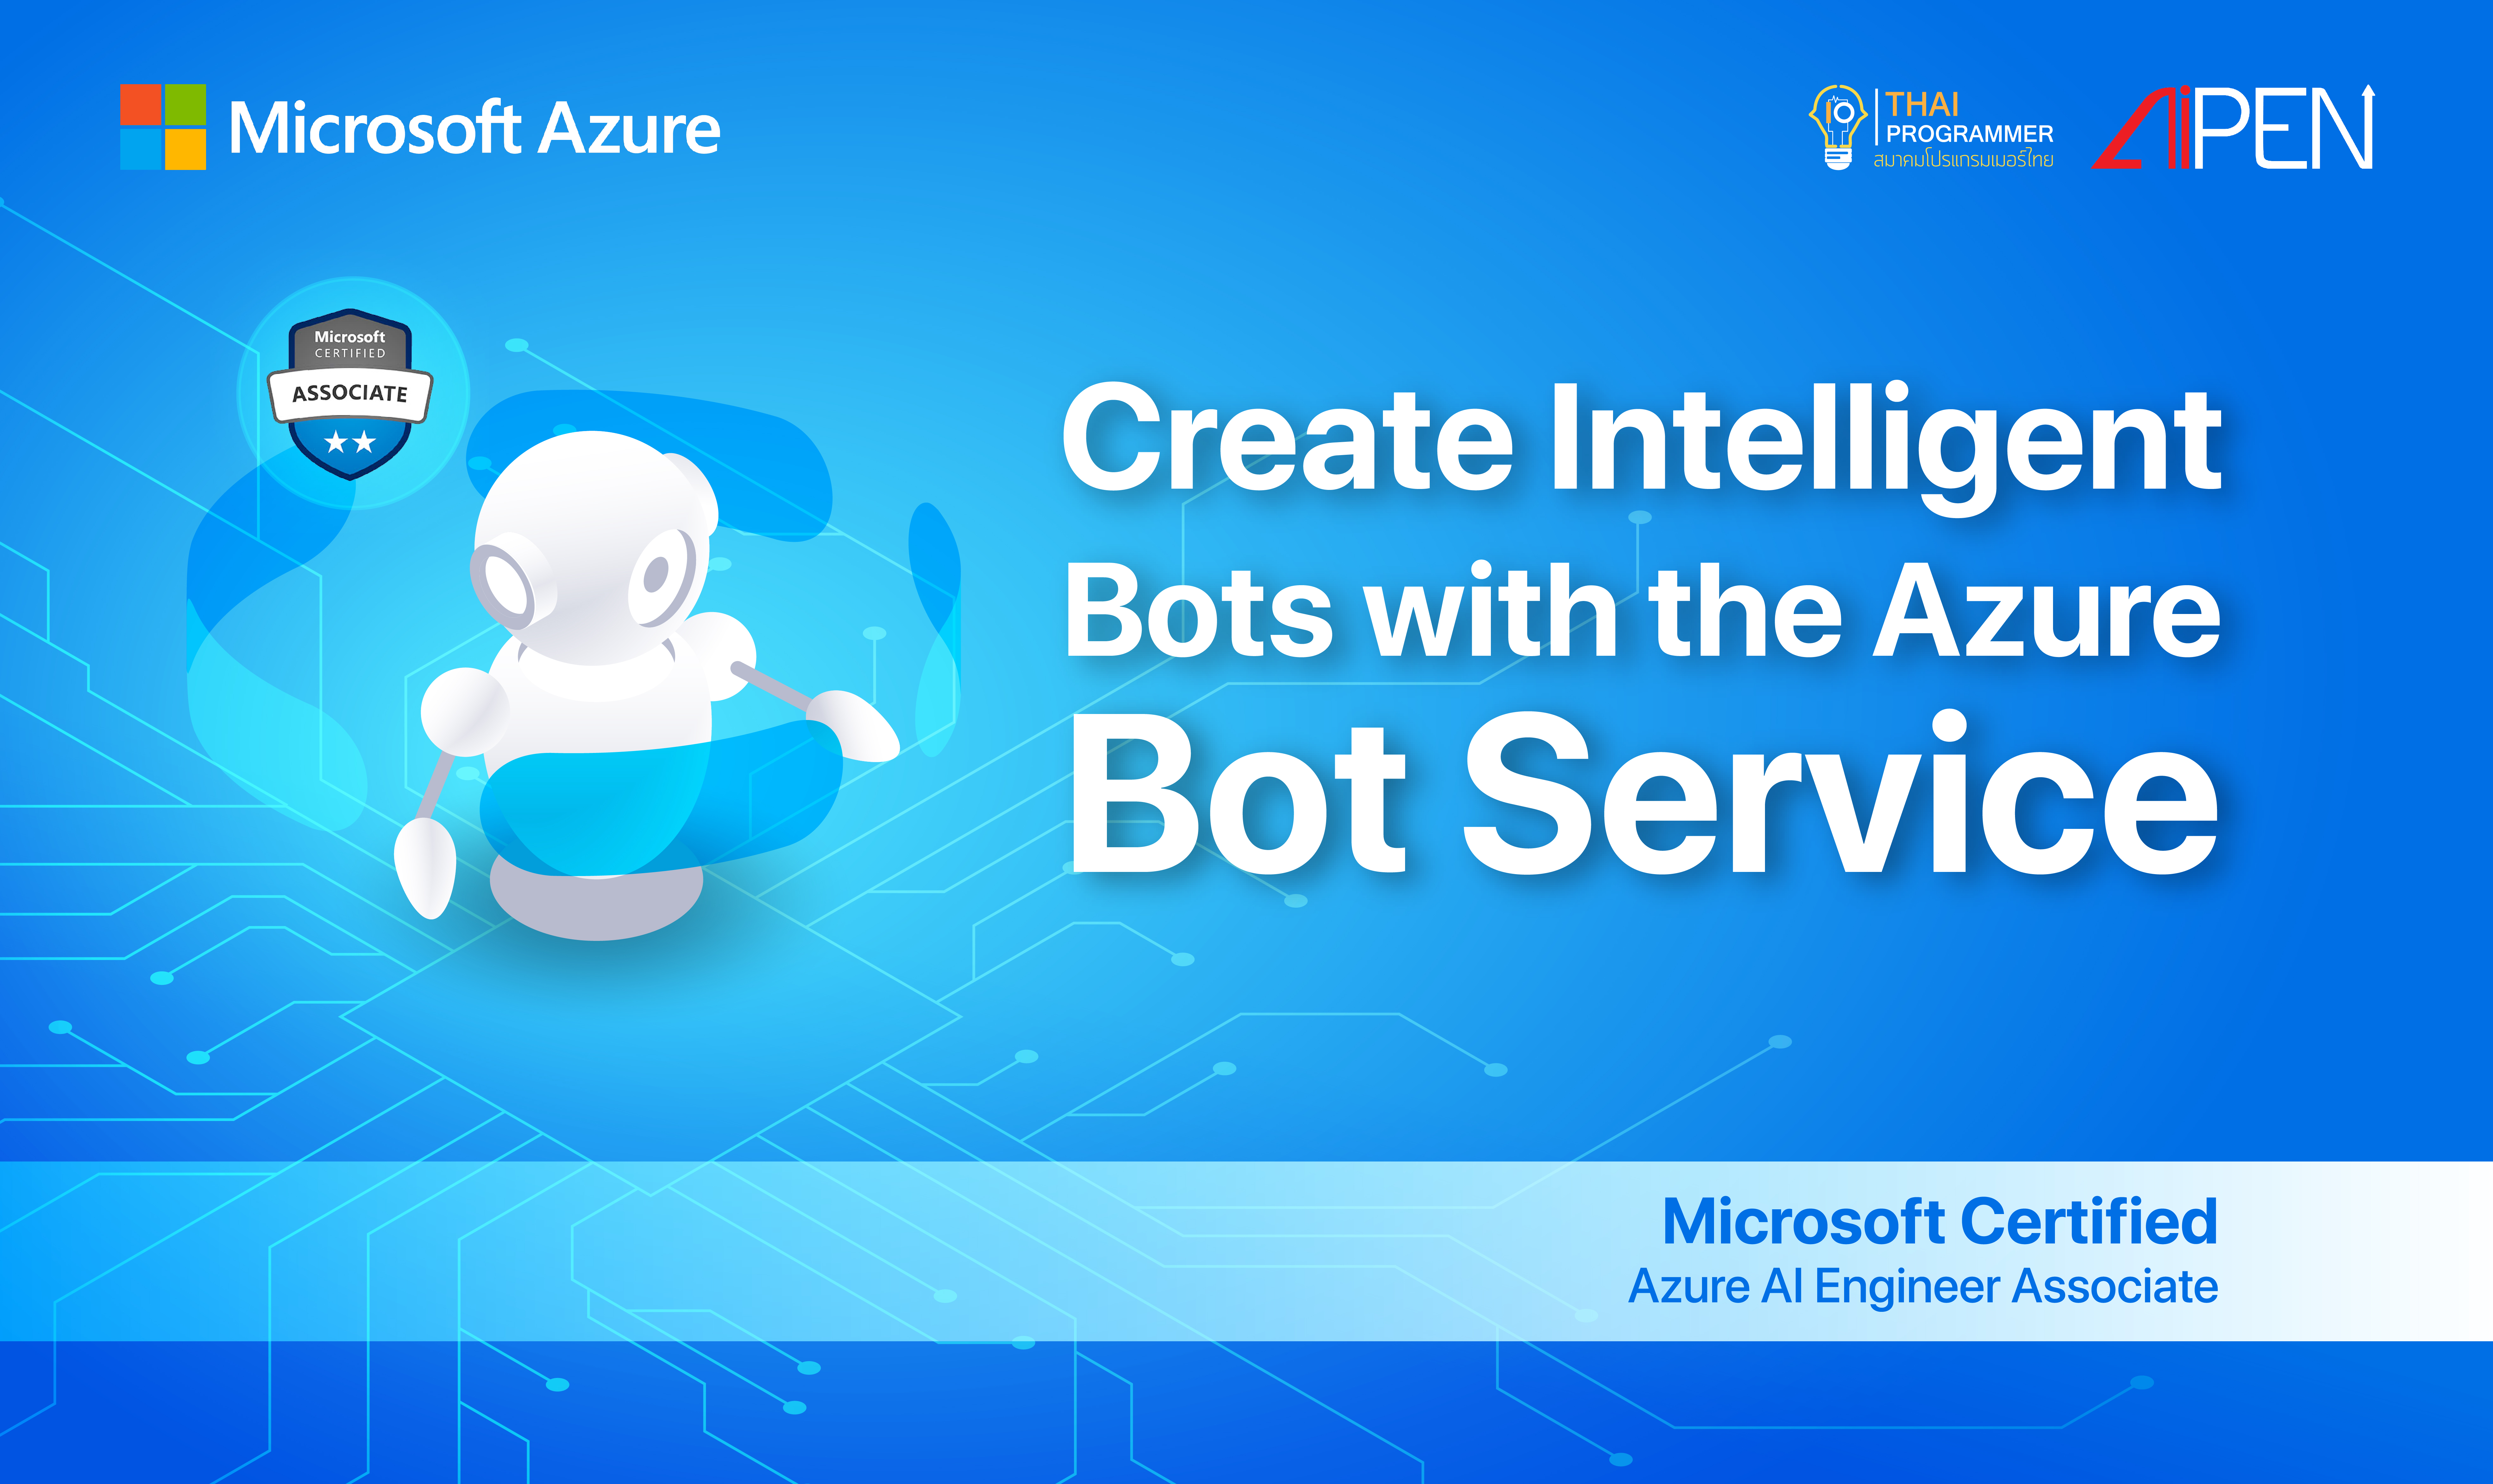 Microsoft Azure : Create Intelligent Bots with the Azure Bot Service